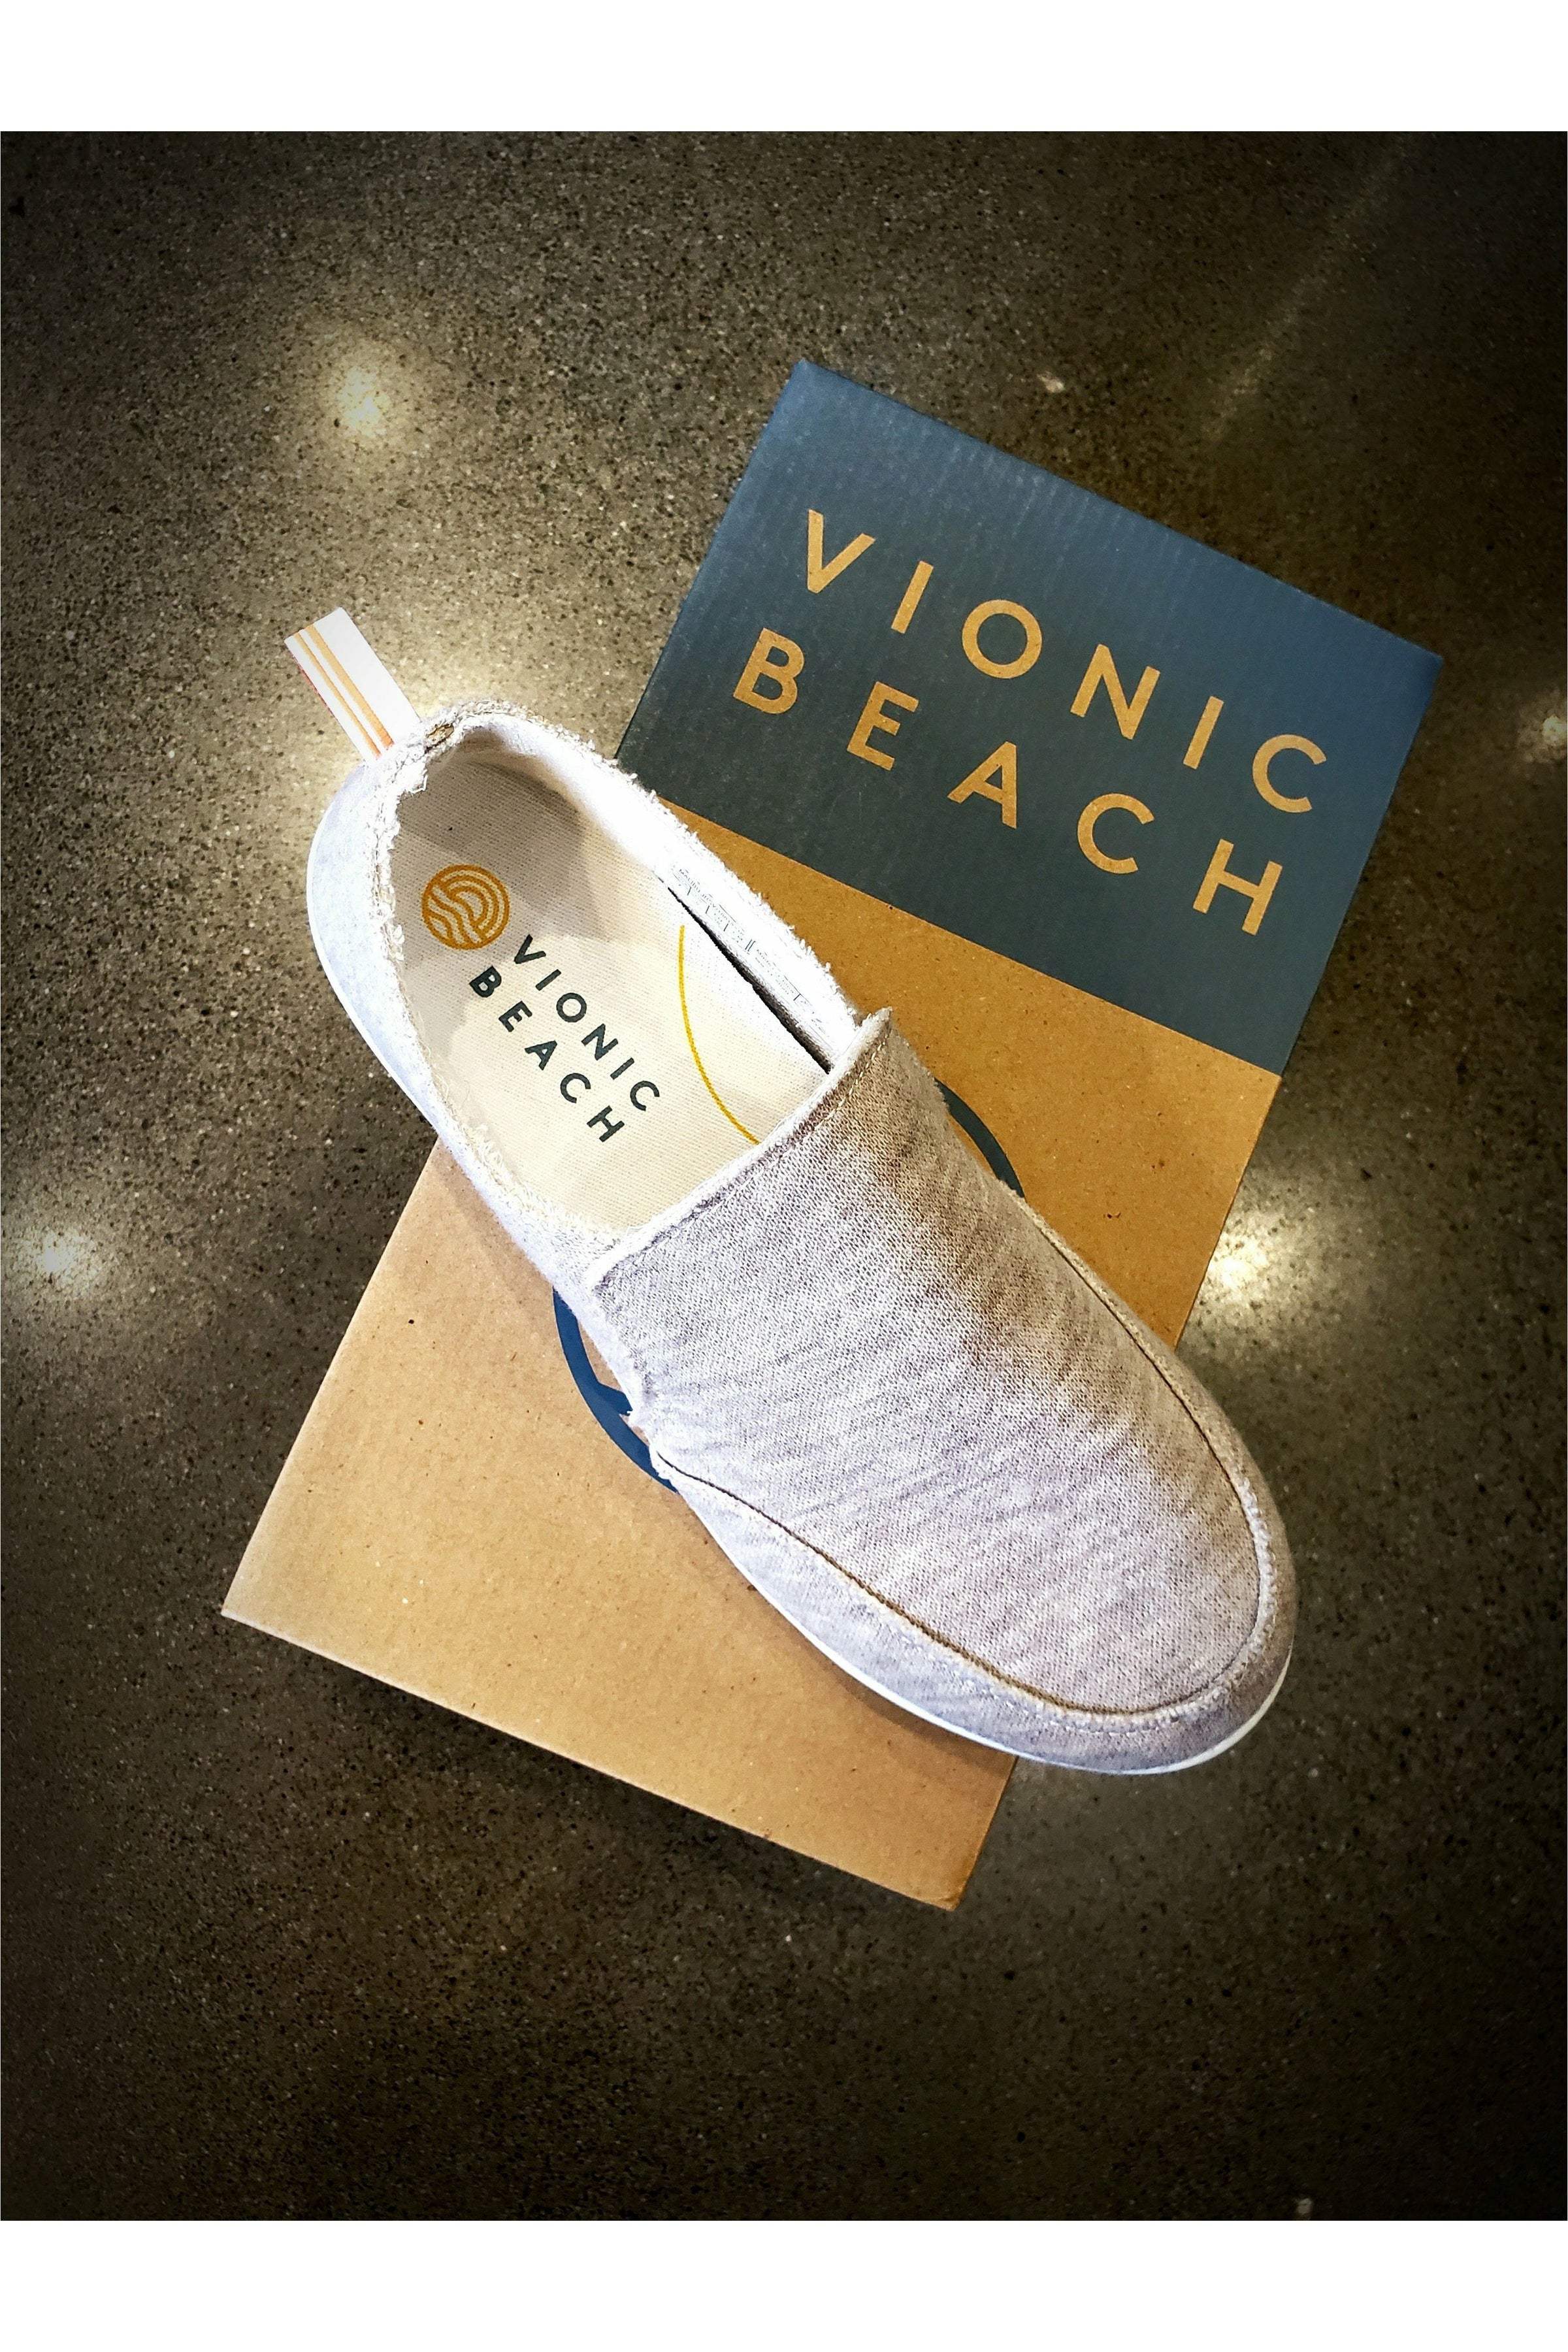 Vionic Venice Canvas Sneakers - Style Pismo CNVS, top, ash grey